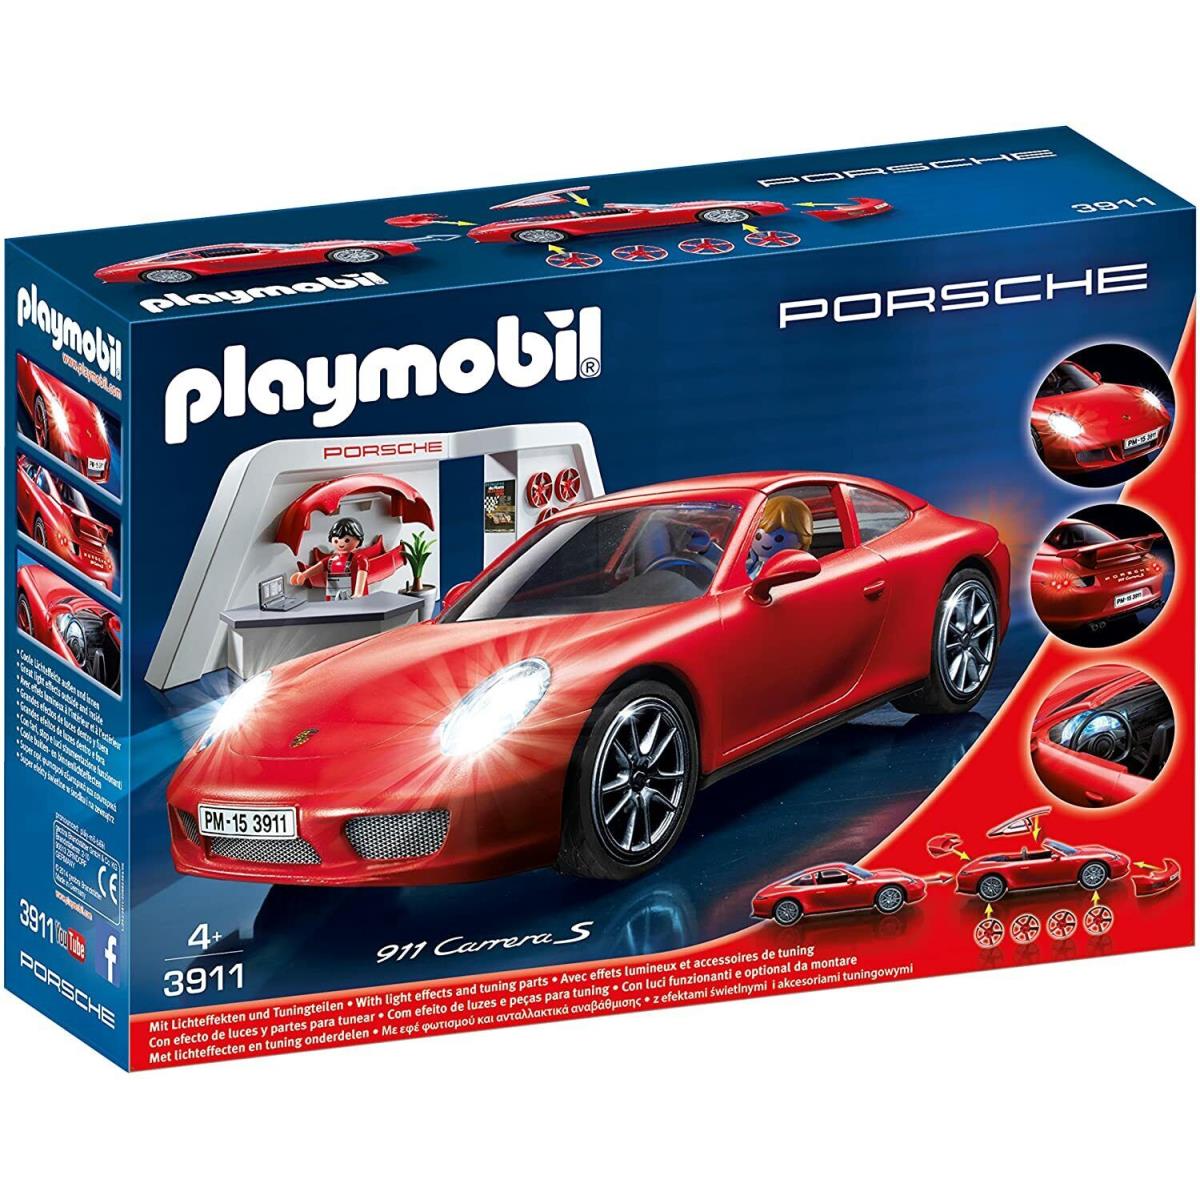 Playmobil Porsche 911 Carrera S with Lights Workshop 3911